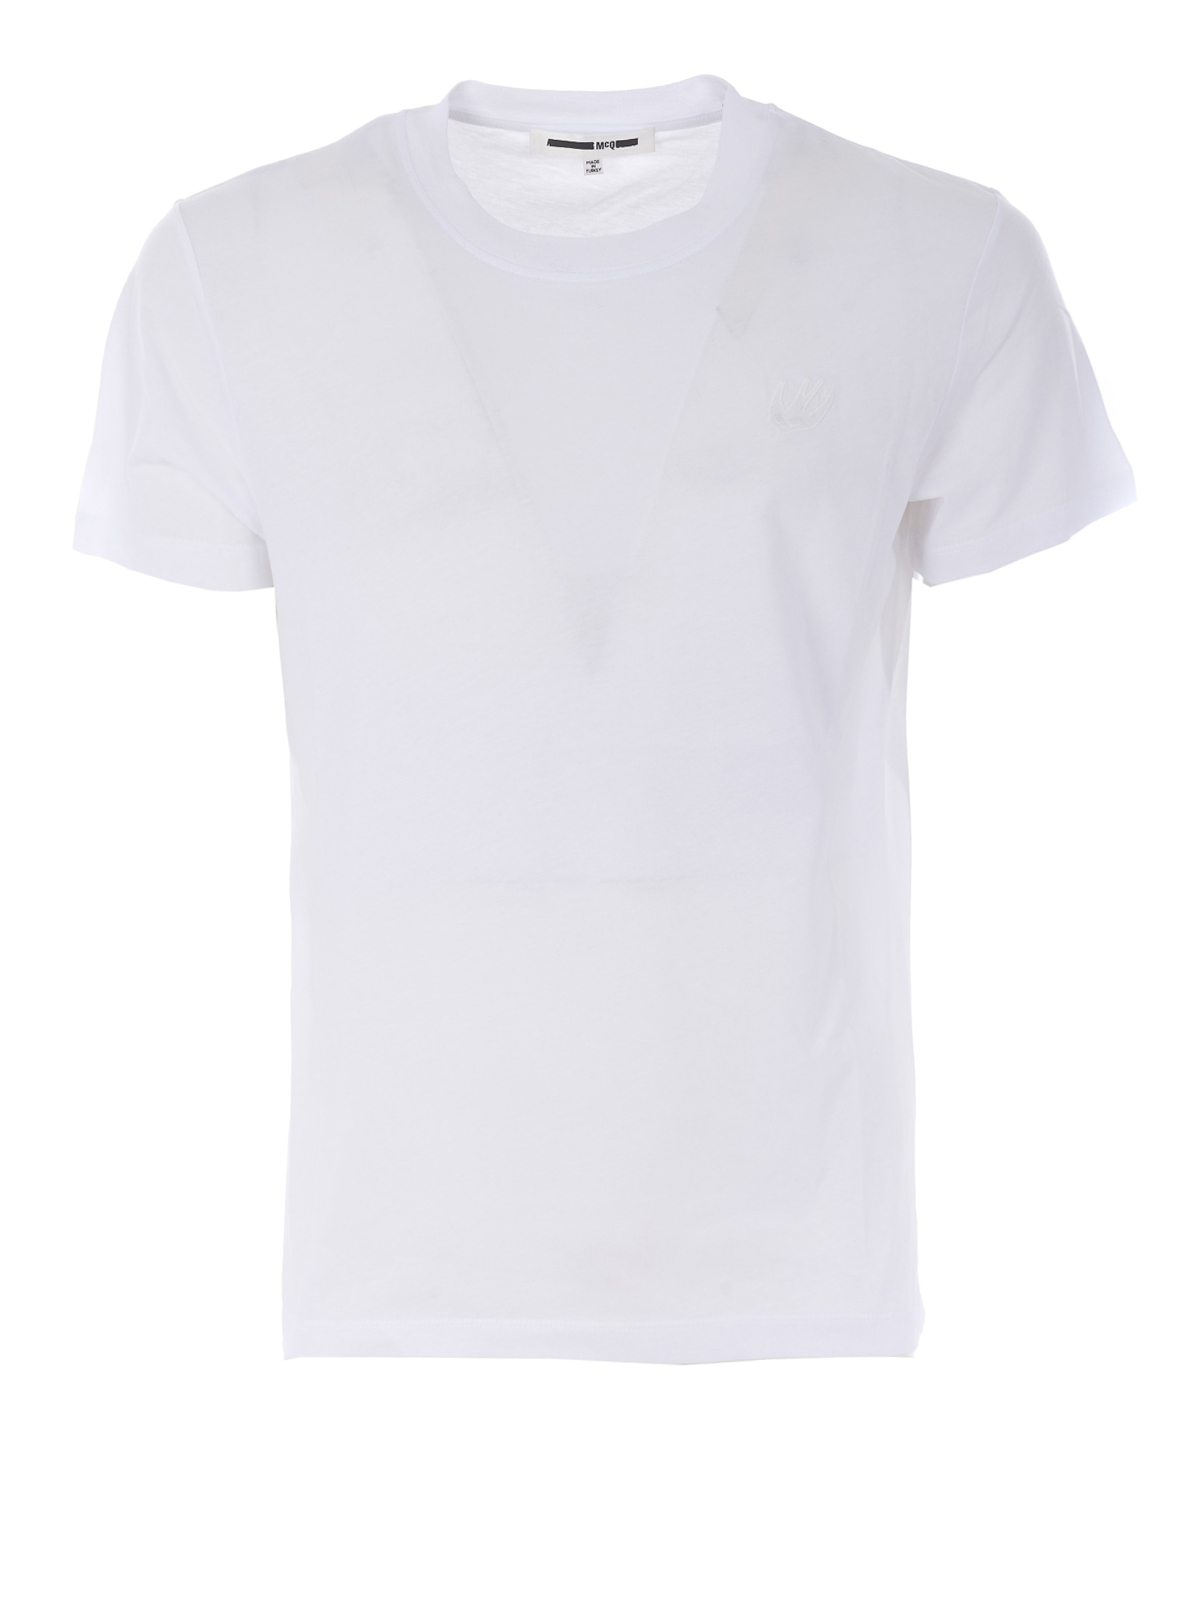 Mcq - Embroidered logo white cotton T-shirt - t-shirts - 277605RMT749000